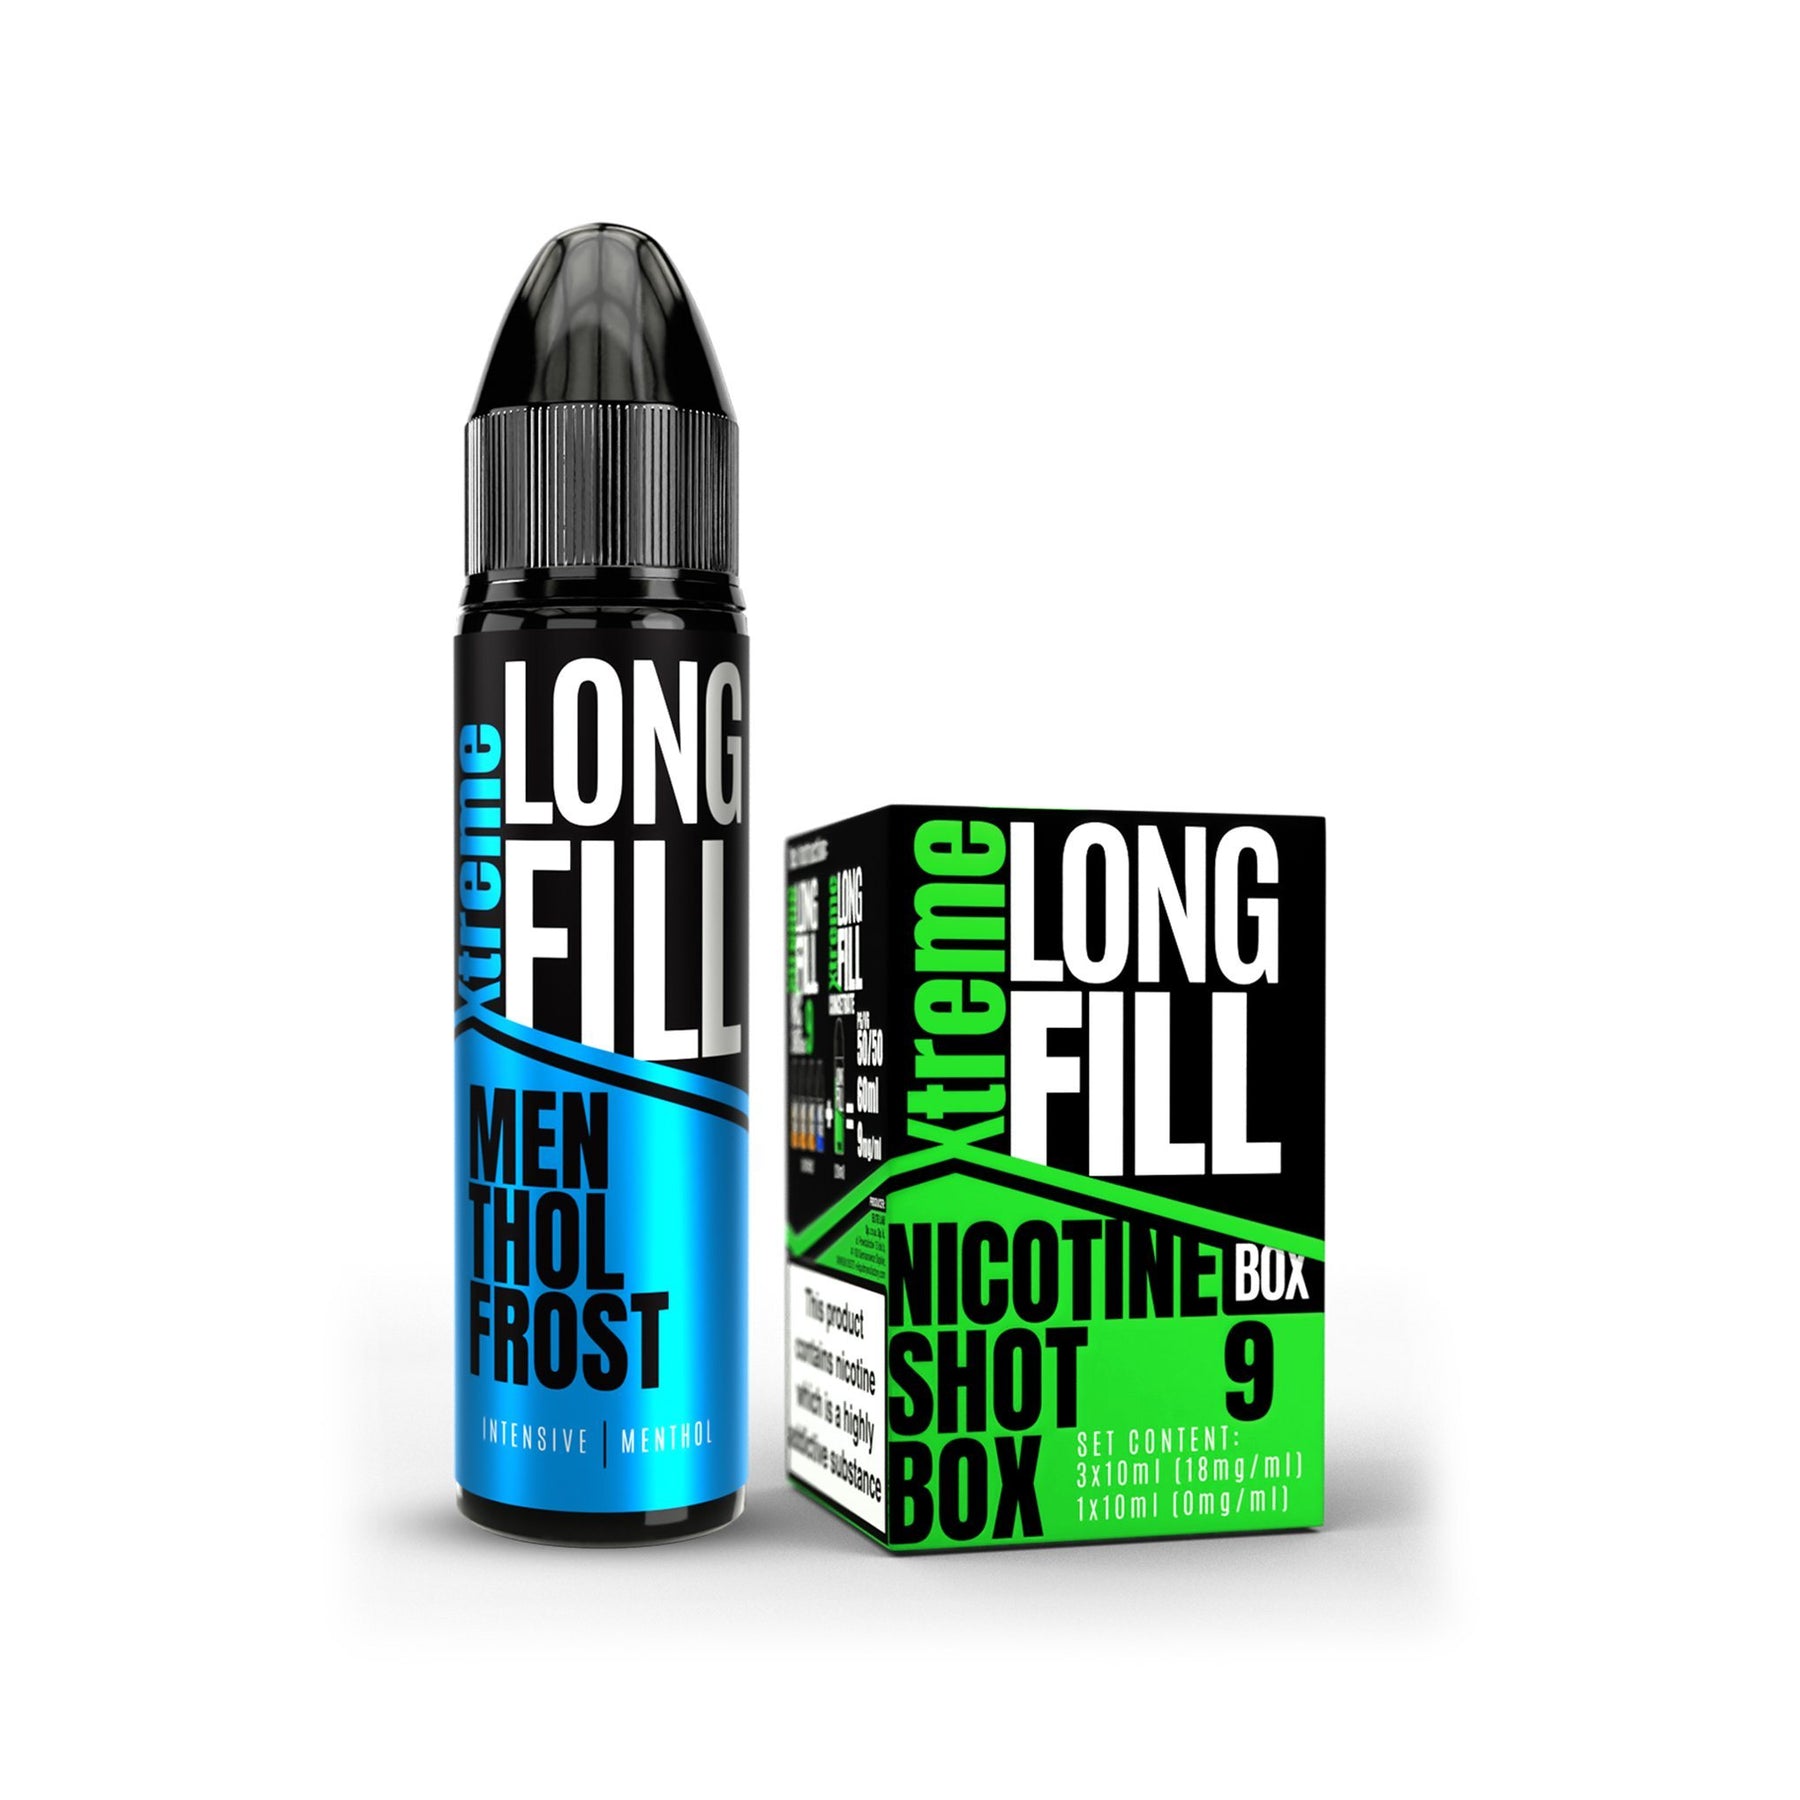 Xtreme Long Fill E-Liquid Menthol Frost 9MG - Medium Nicotine